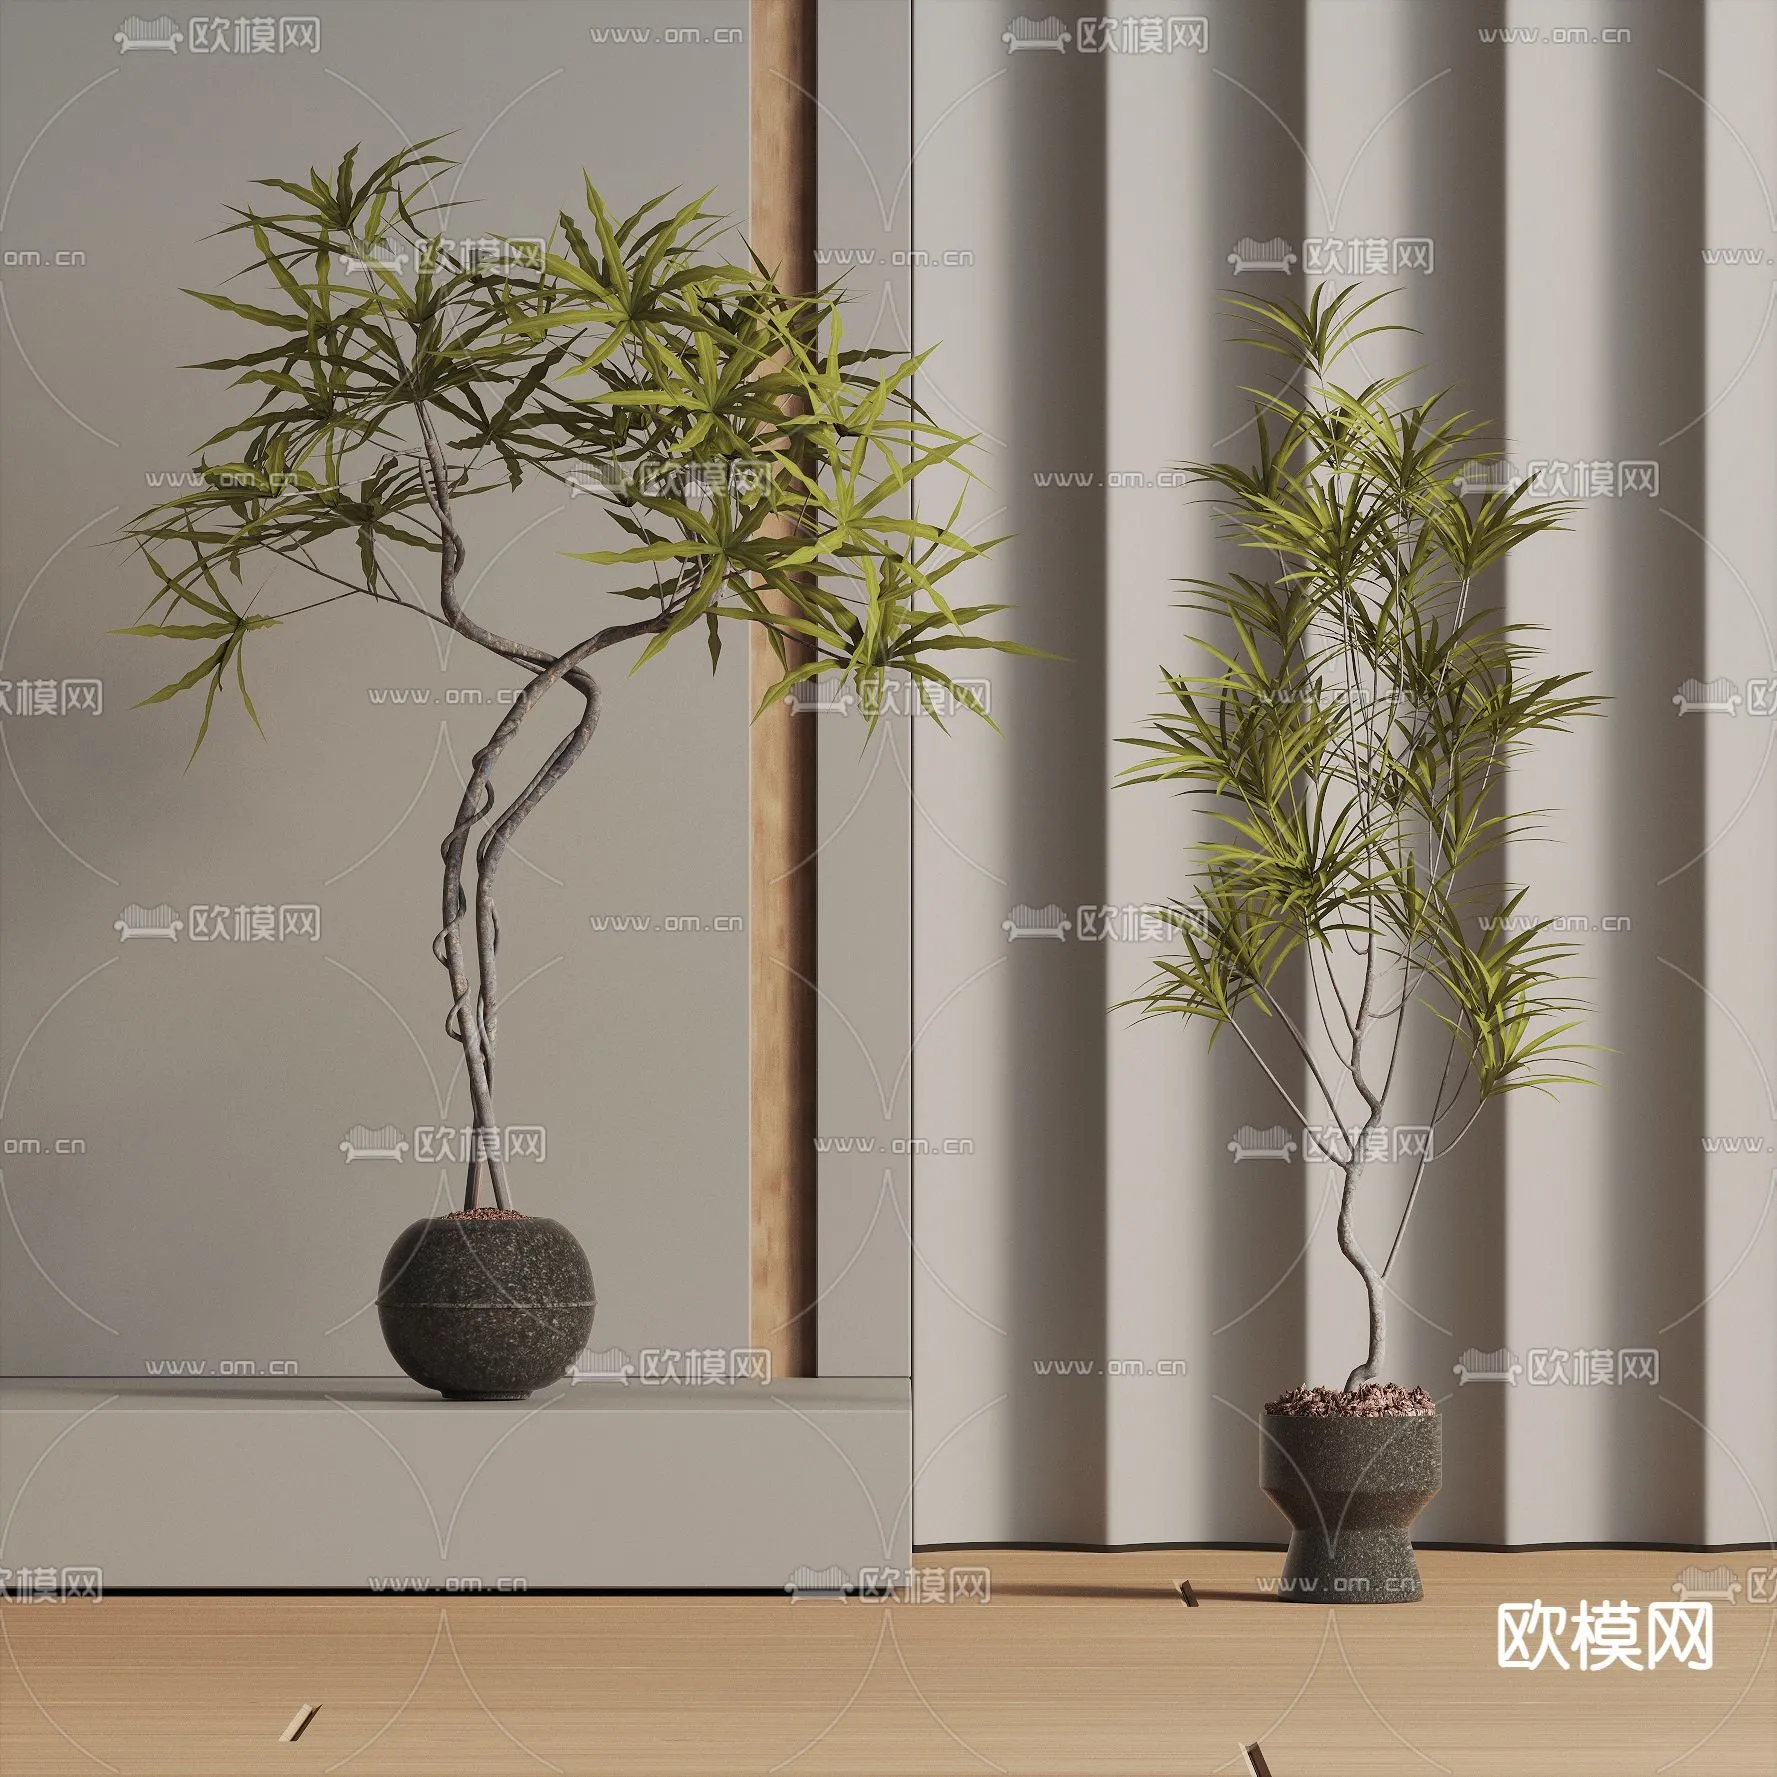 Plant – VRAY / CORONA – 3D MODEL – 471